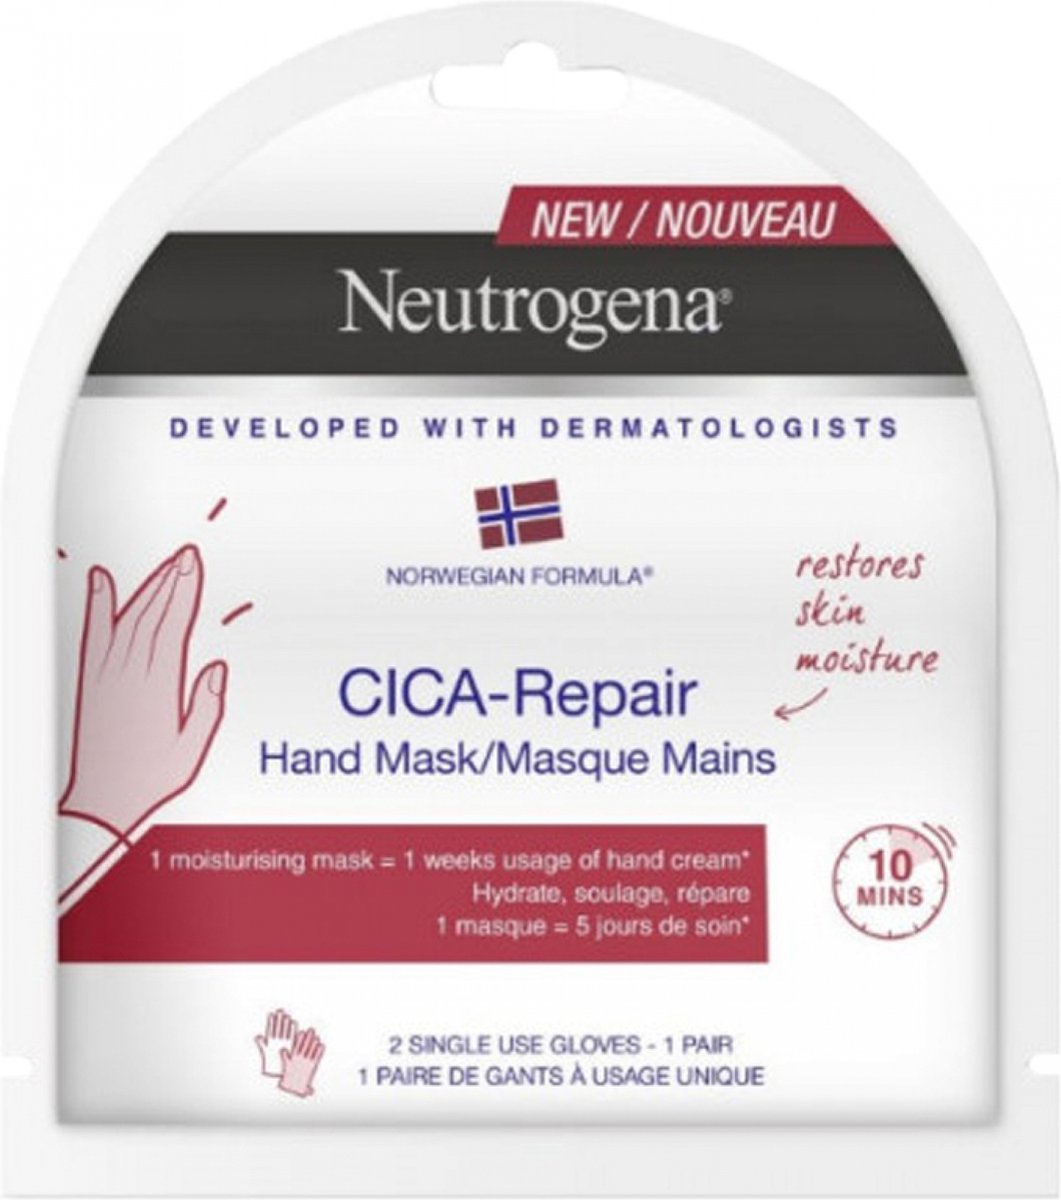 Neutrogena - Cica-Repair Hand Mask - Hand Care Mask 1 Pair